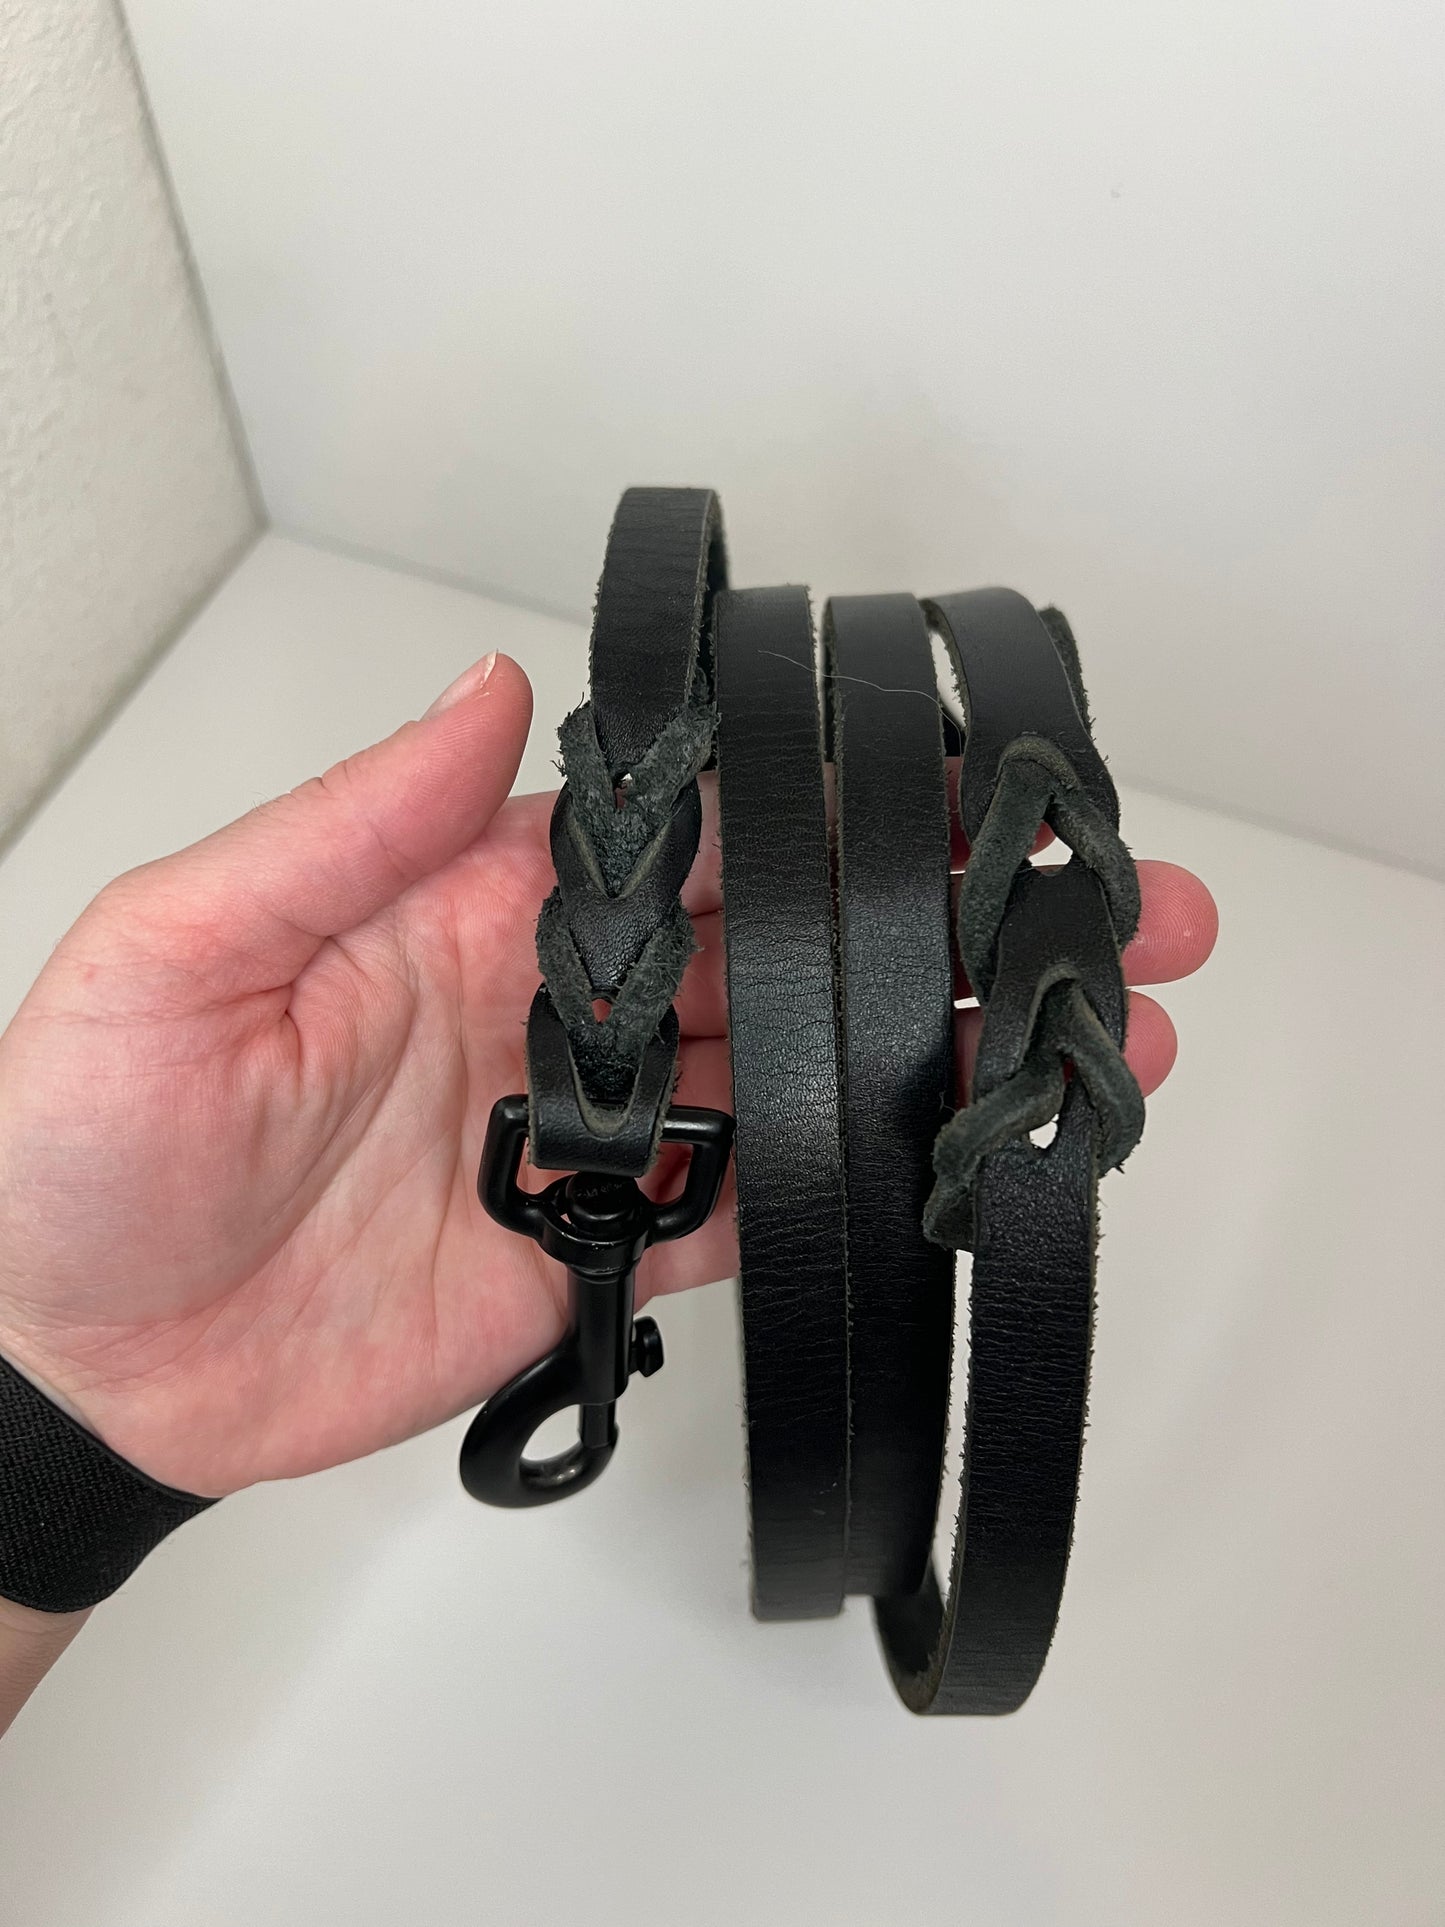 Black leather leash